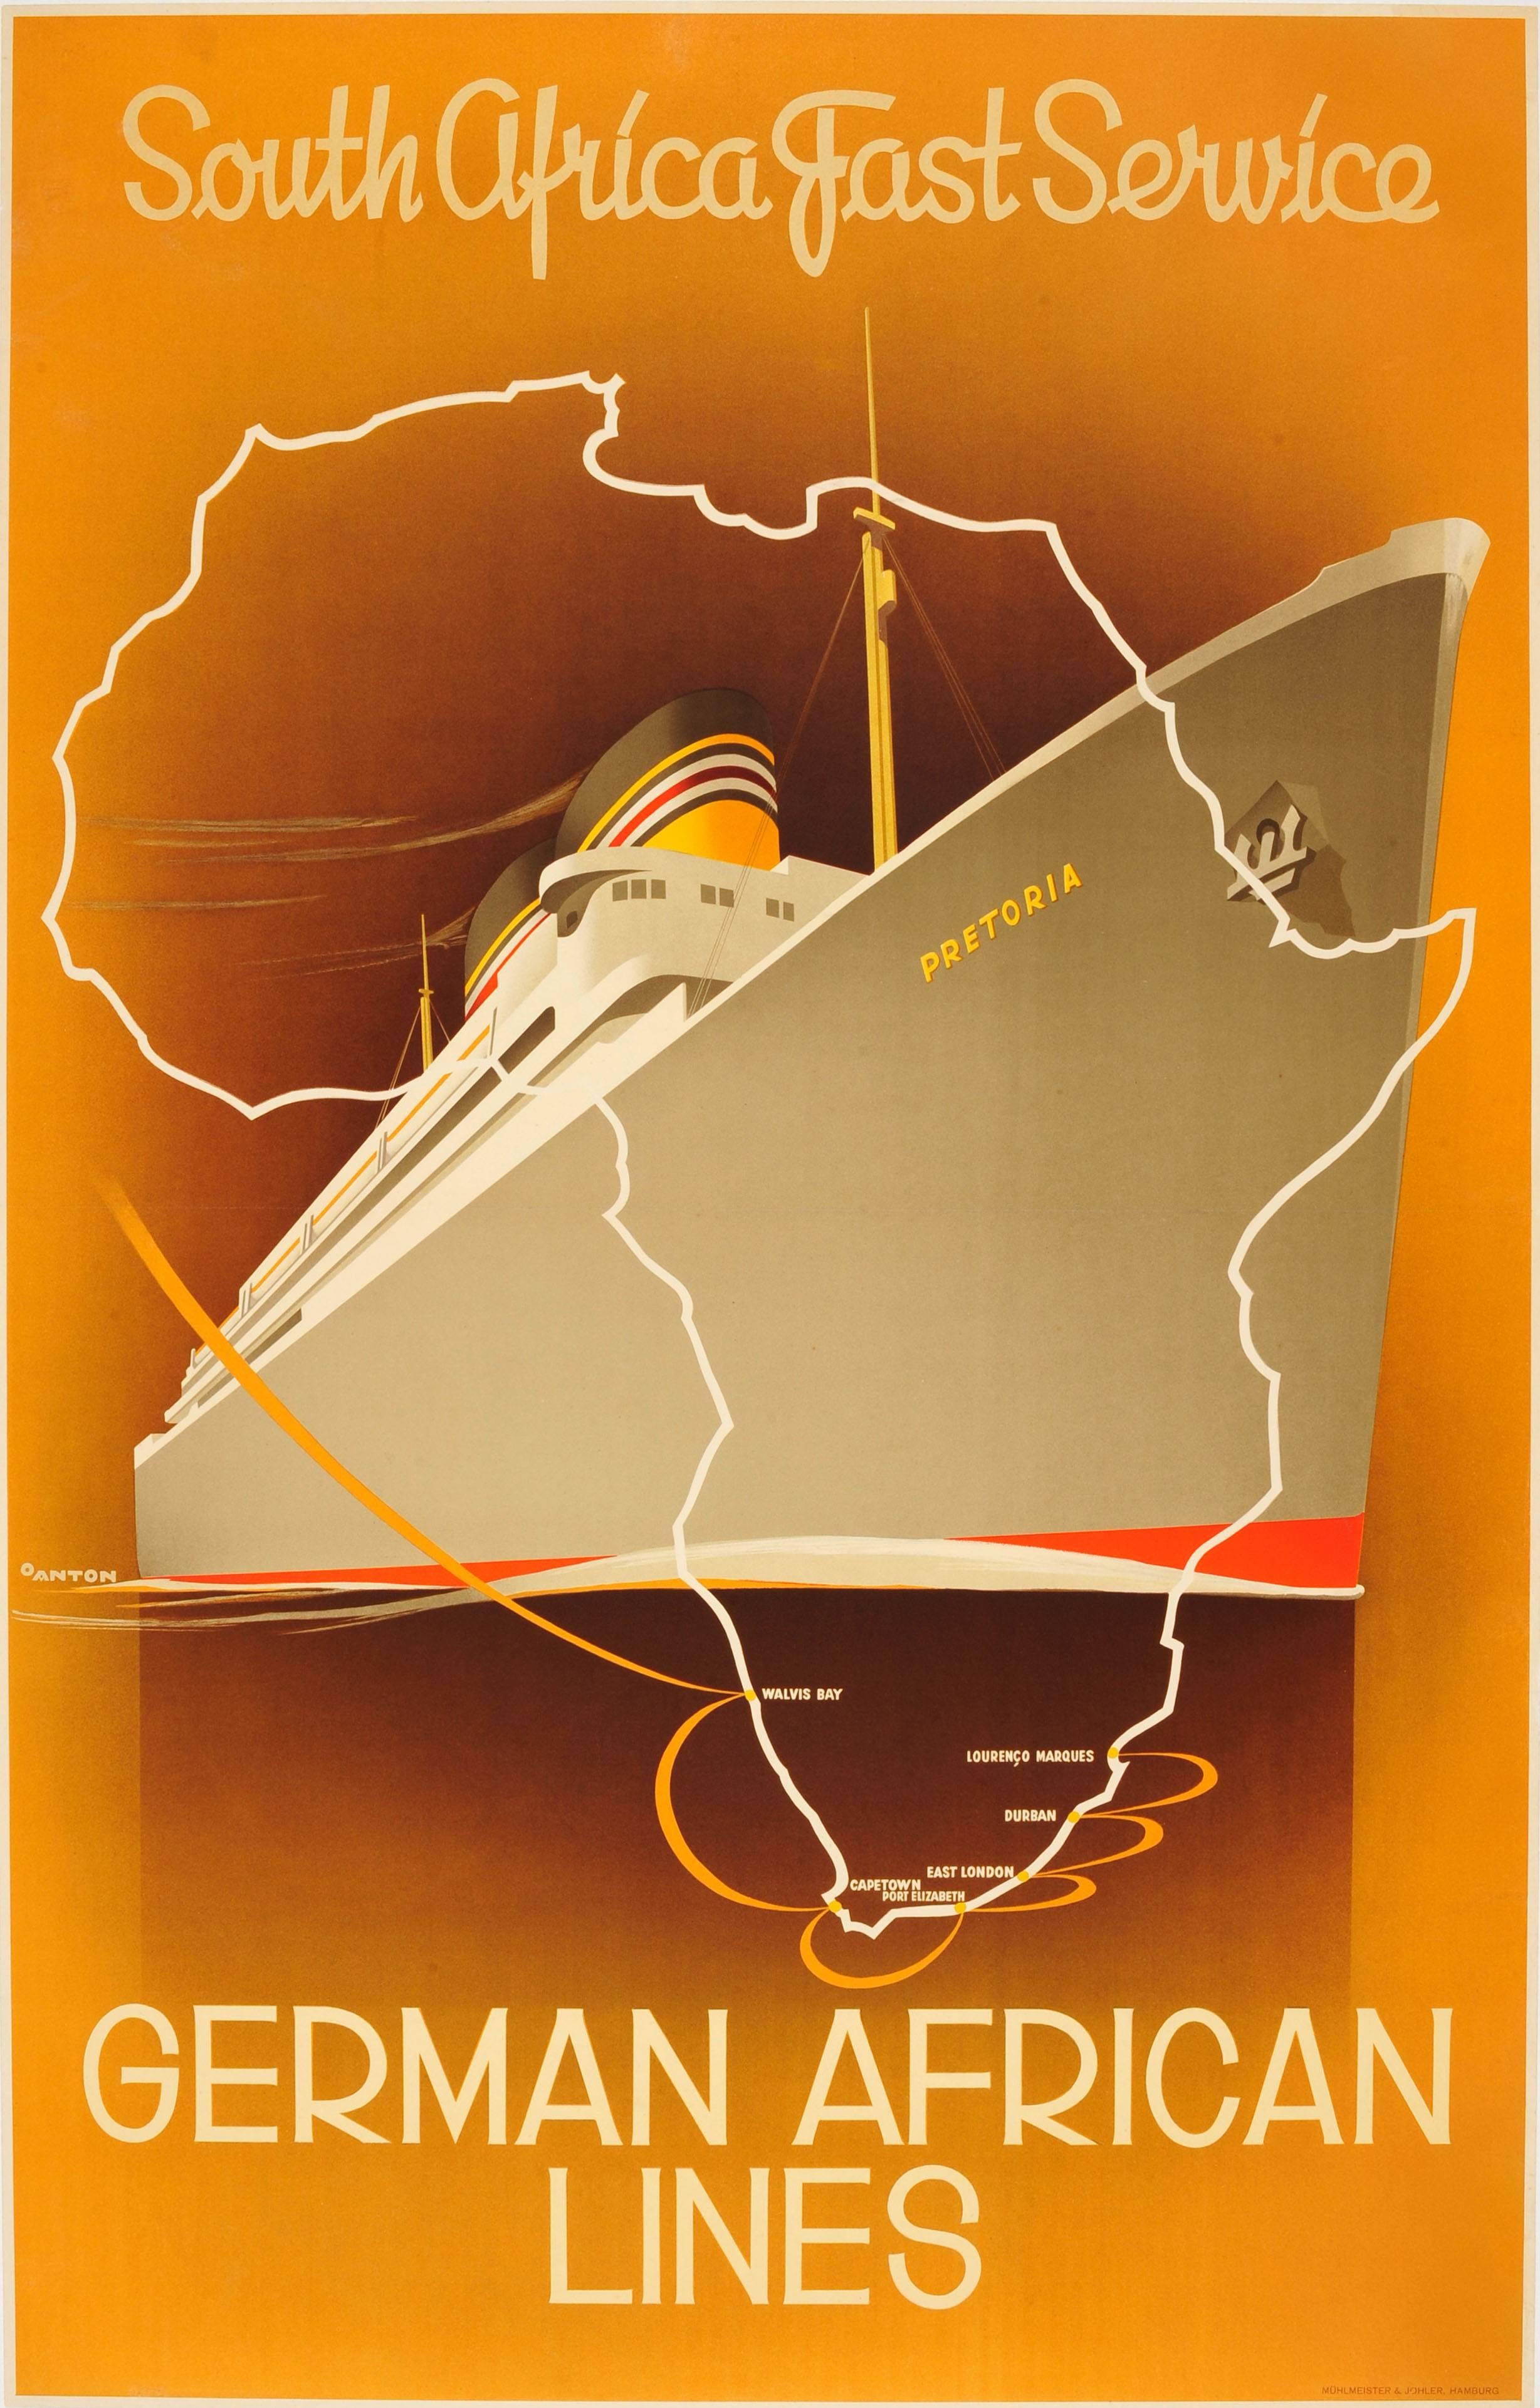 Ottomar Anton Print - Original Art Deco German African Lines Cruise Poster For South Africa - Pretoria